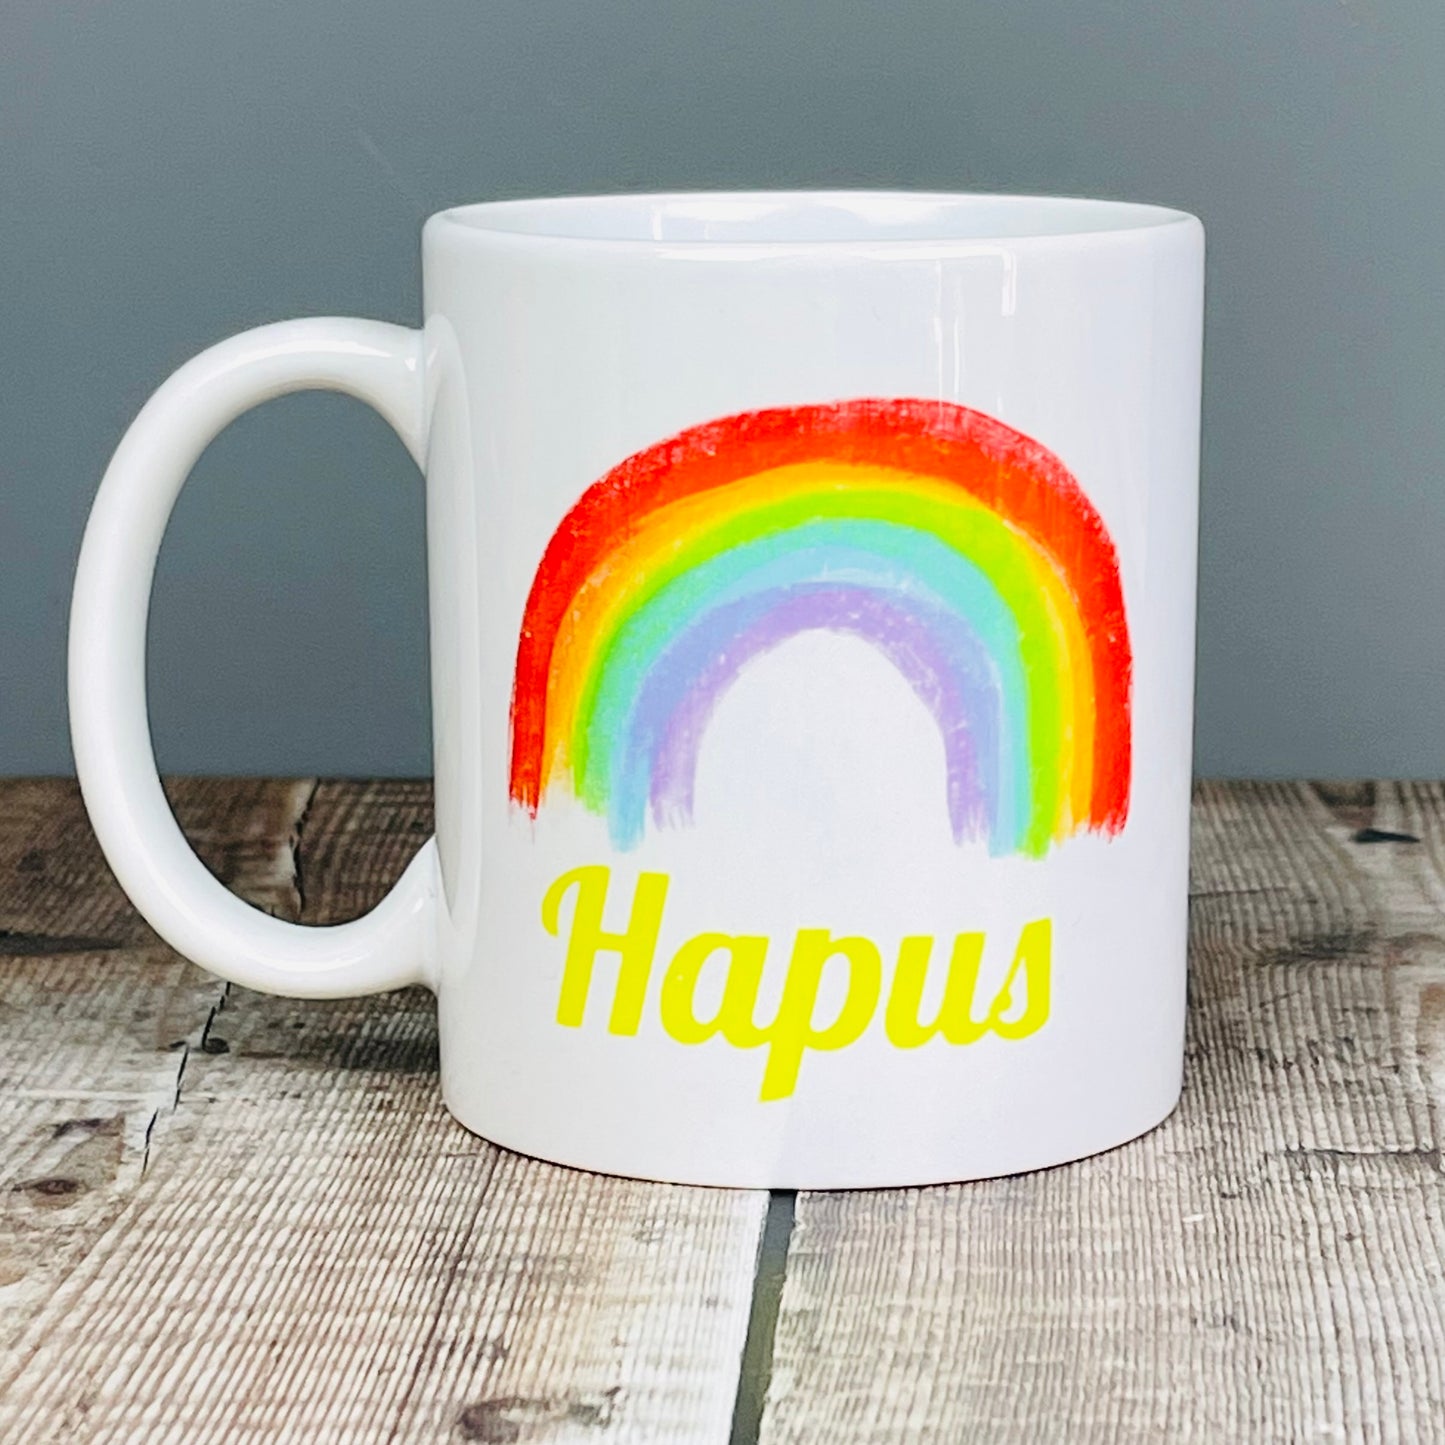 Rainbow Hapus Welsh Mug